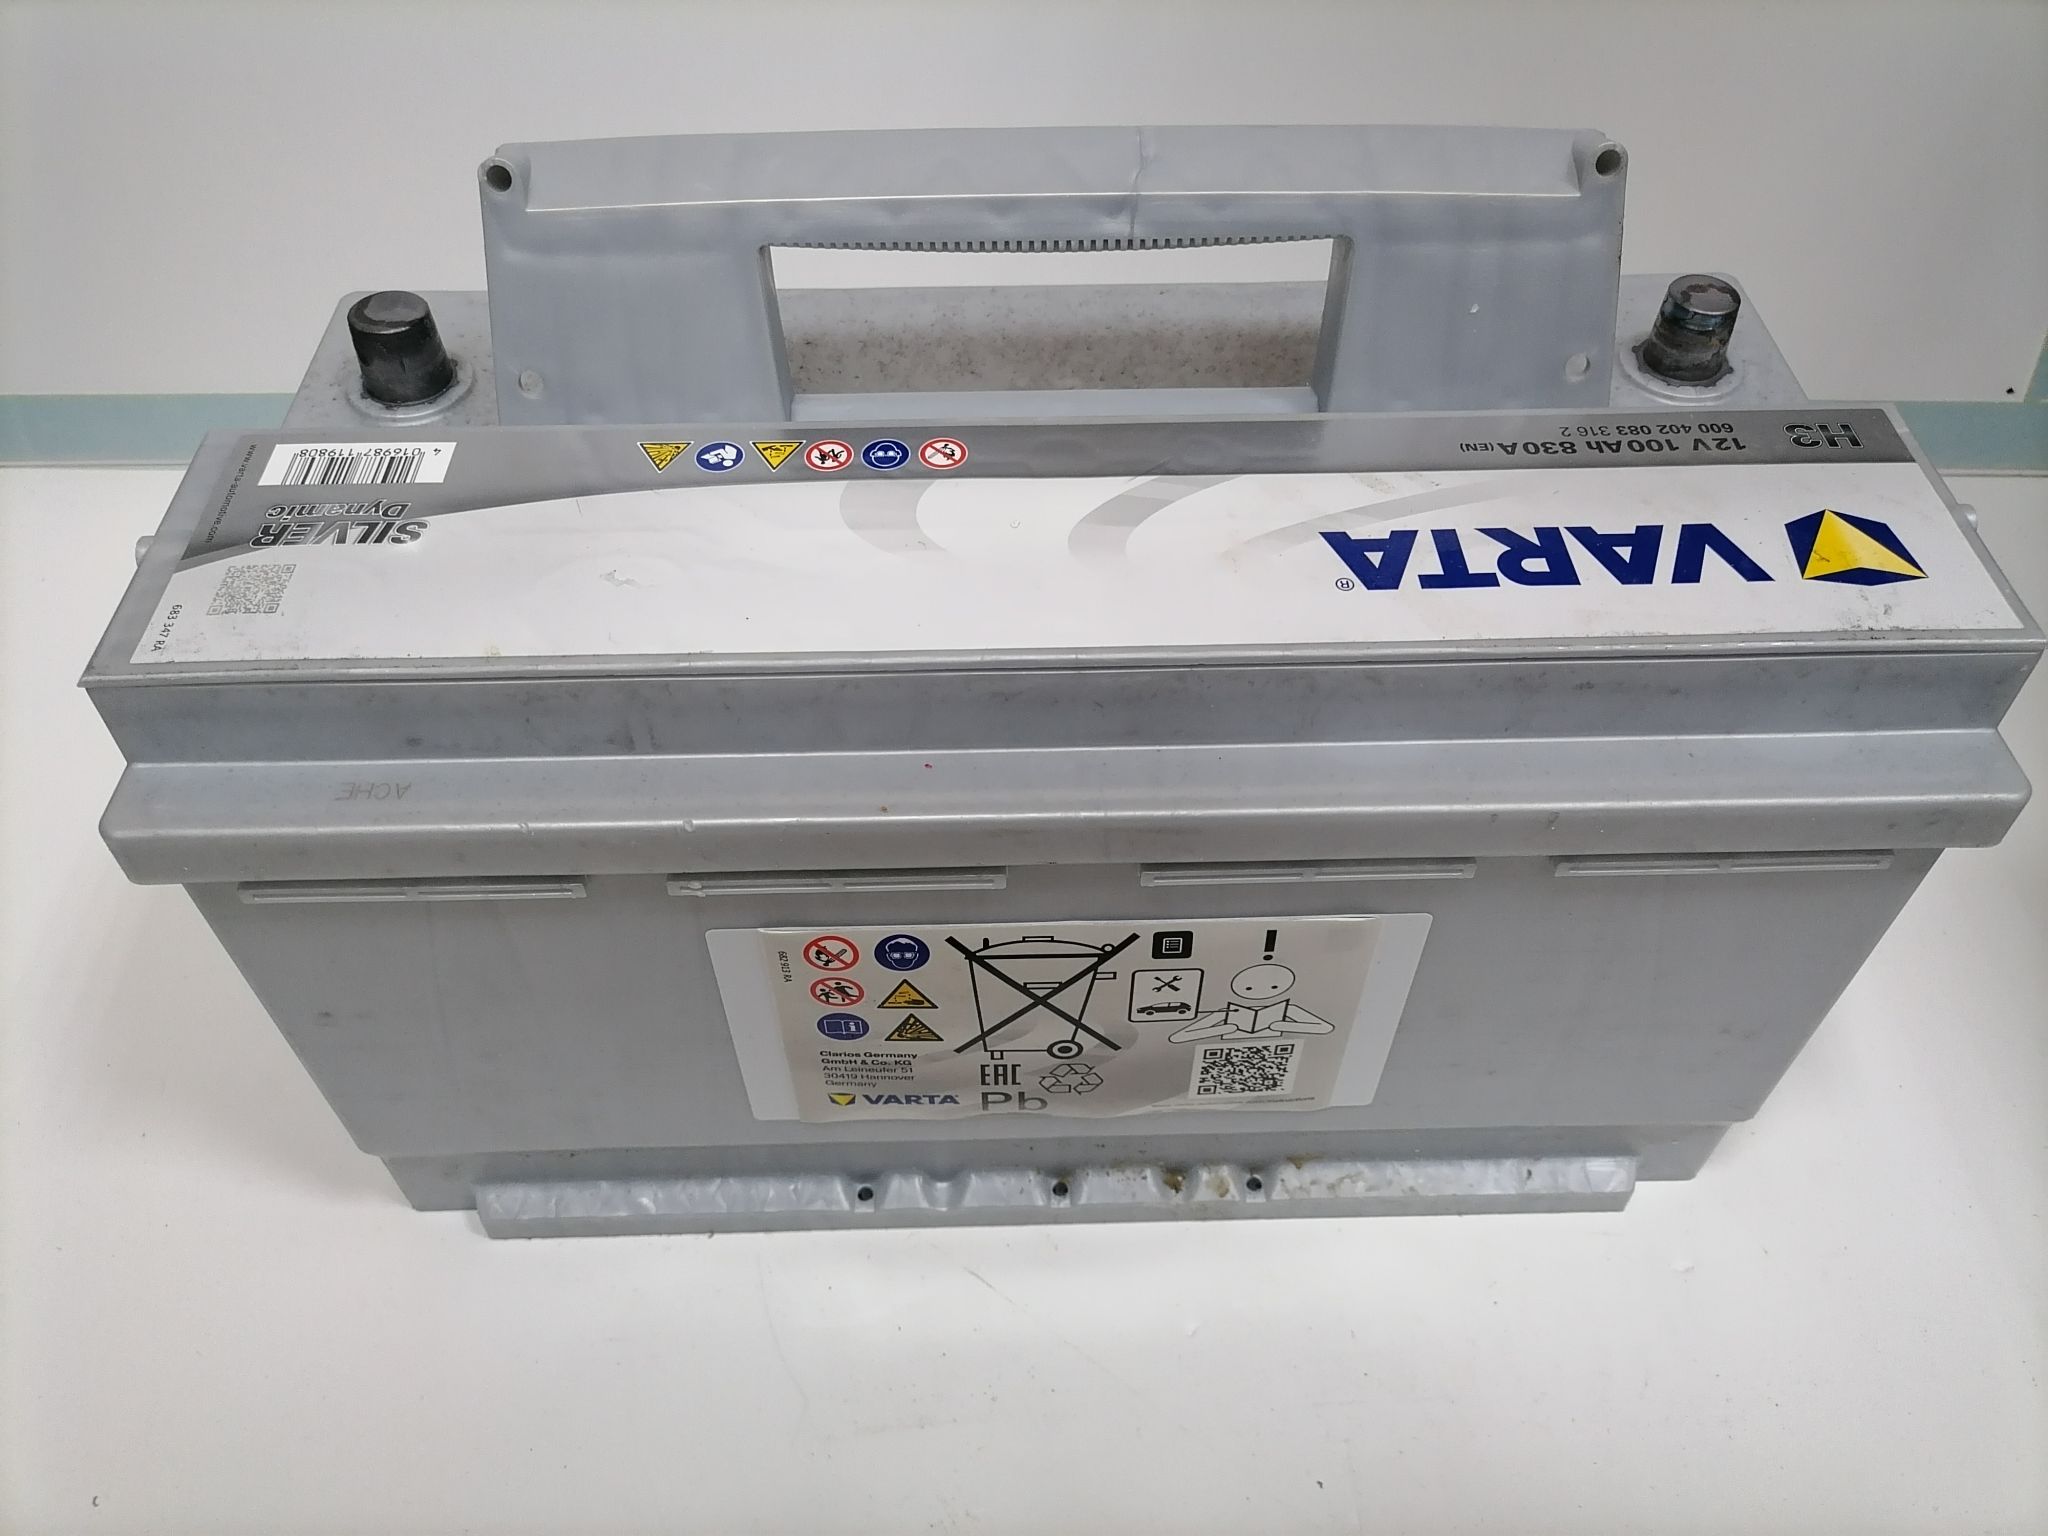 Batterie Varta Silver Dynamic H3 12v 100ah 830A 600 402 083 L5D